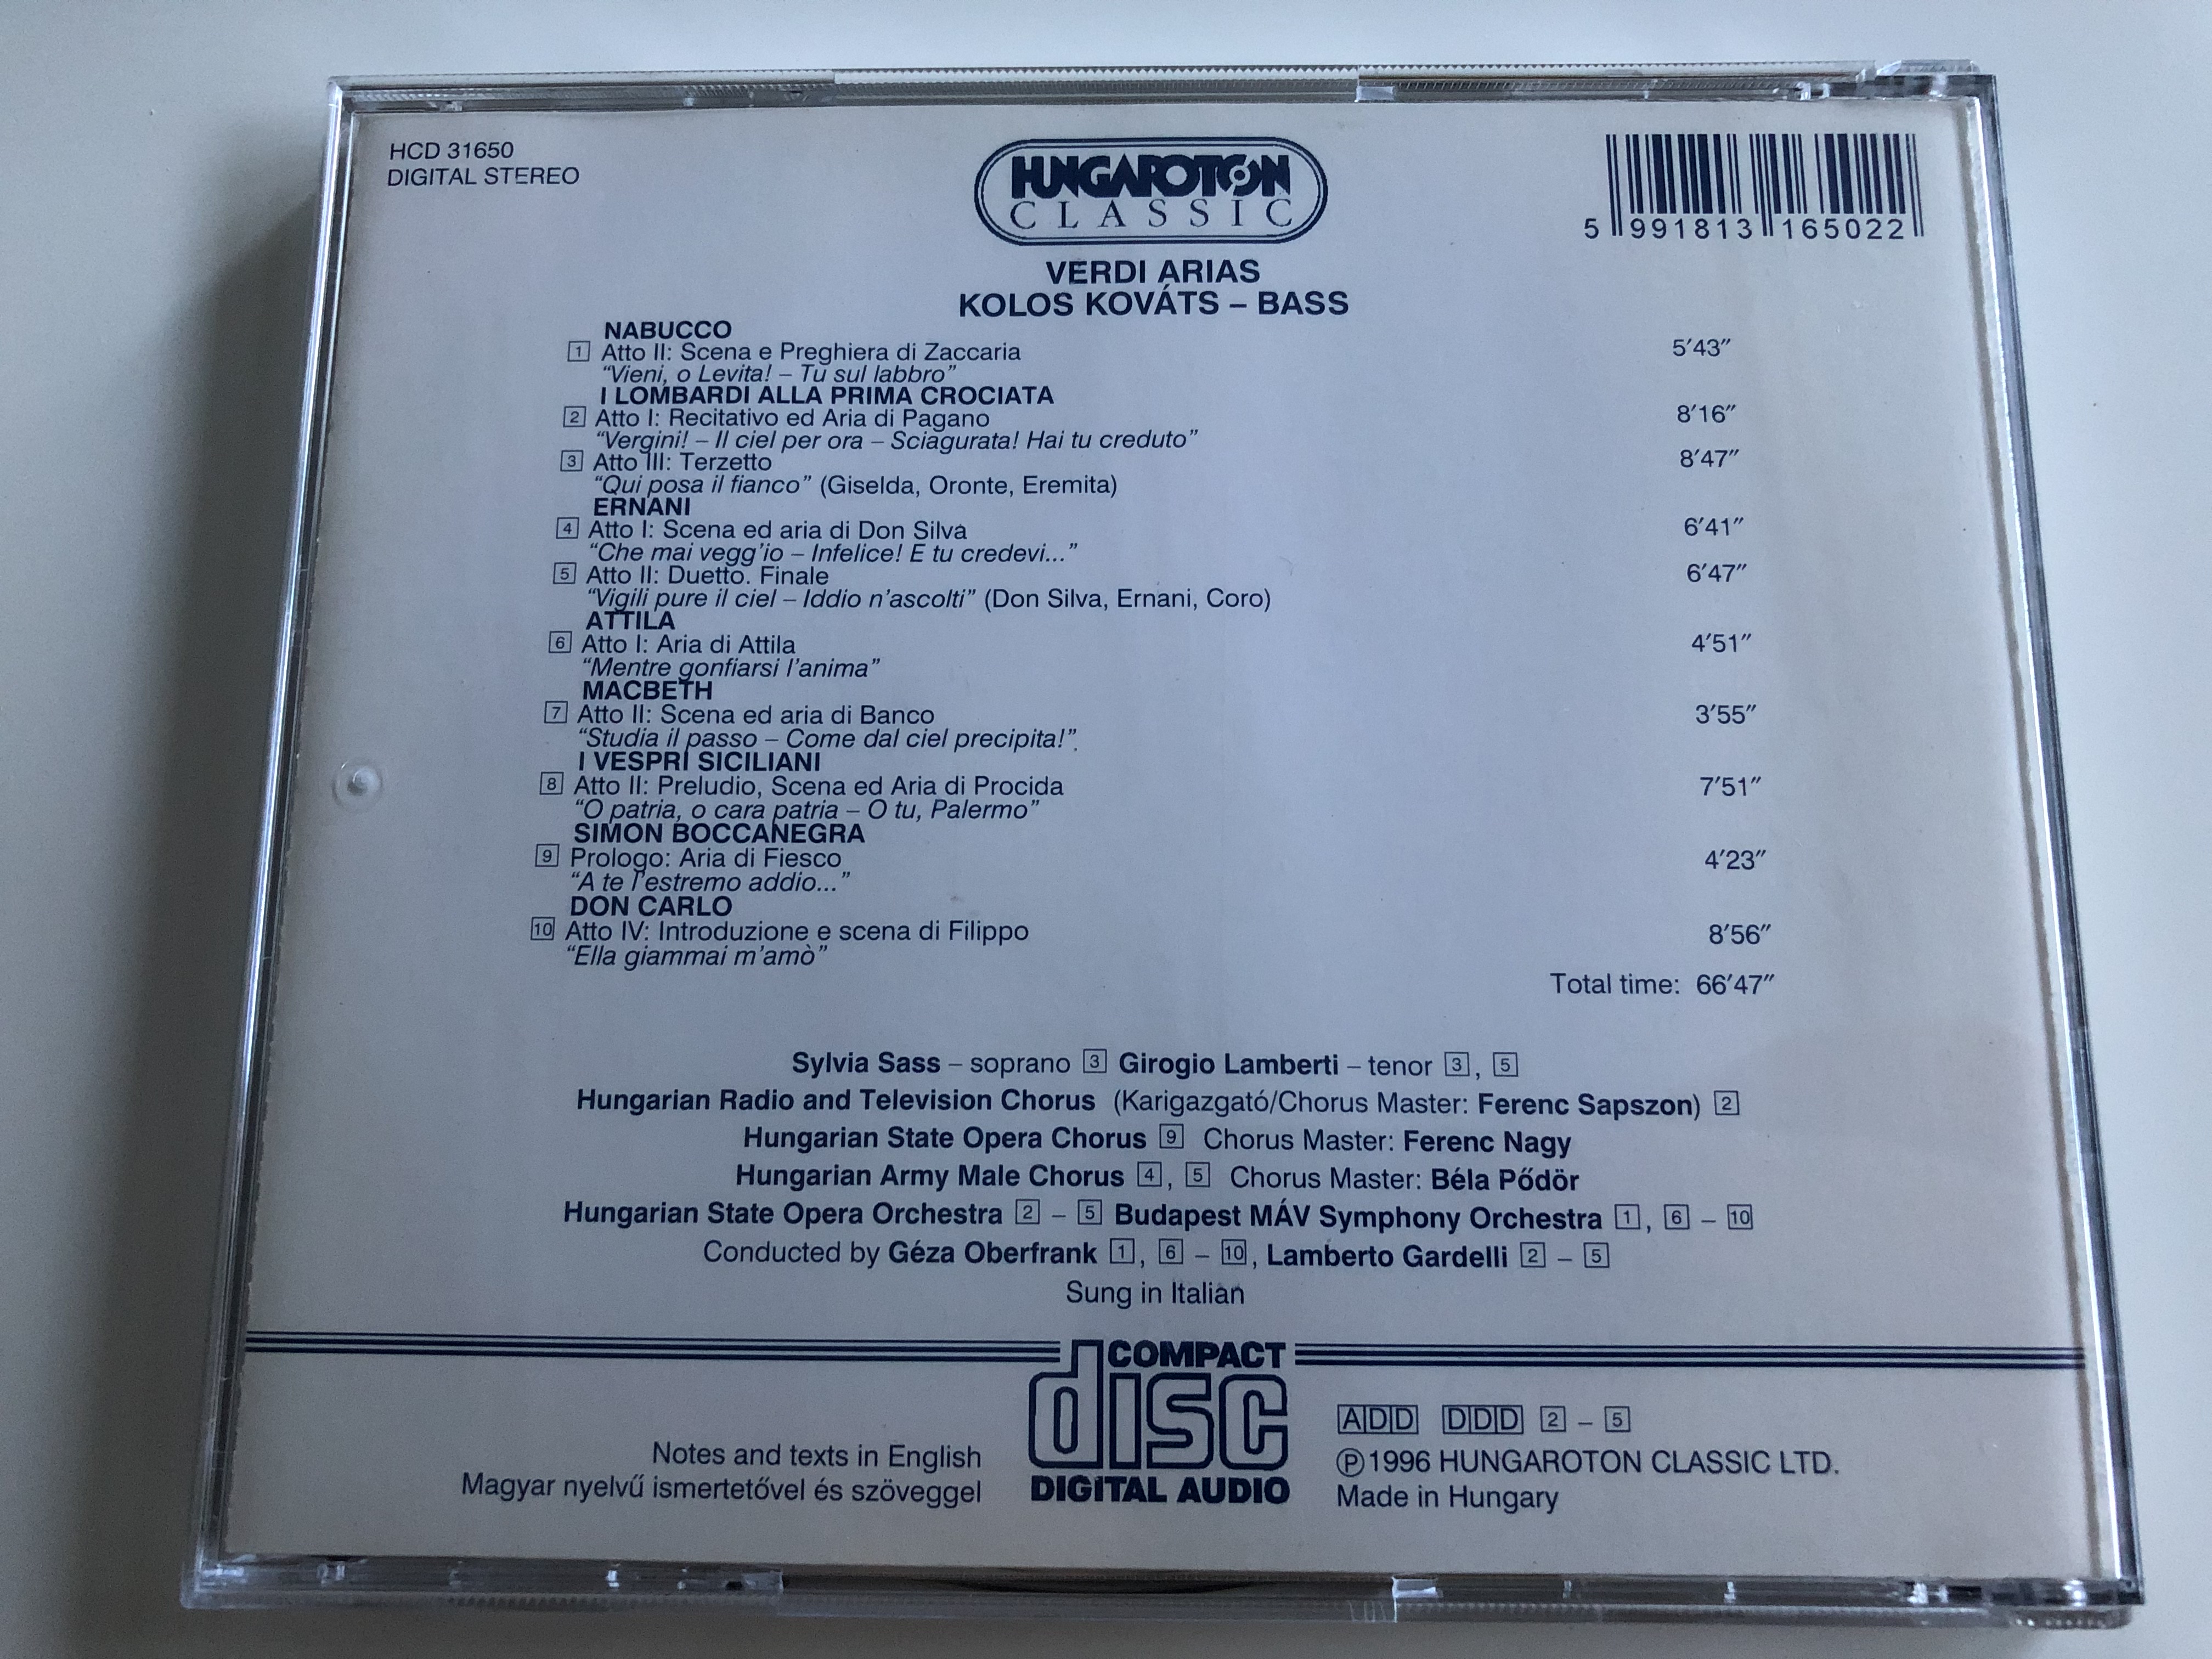 kolos-kov-ts-bass-great-hungarian-voices-verdi-nabucco-i-lombardi-ernani-attila-macbeth-i-vespri-siciliani-simon-boccanegra-don-carlo-hungaroton-classic-audio-cd-1996-hcd-31650-7-.jpg